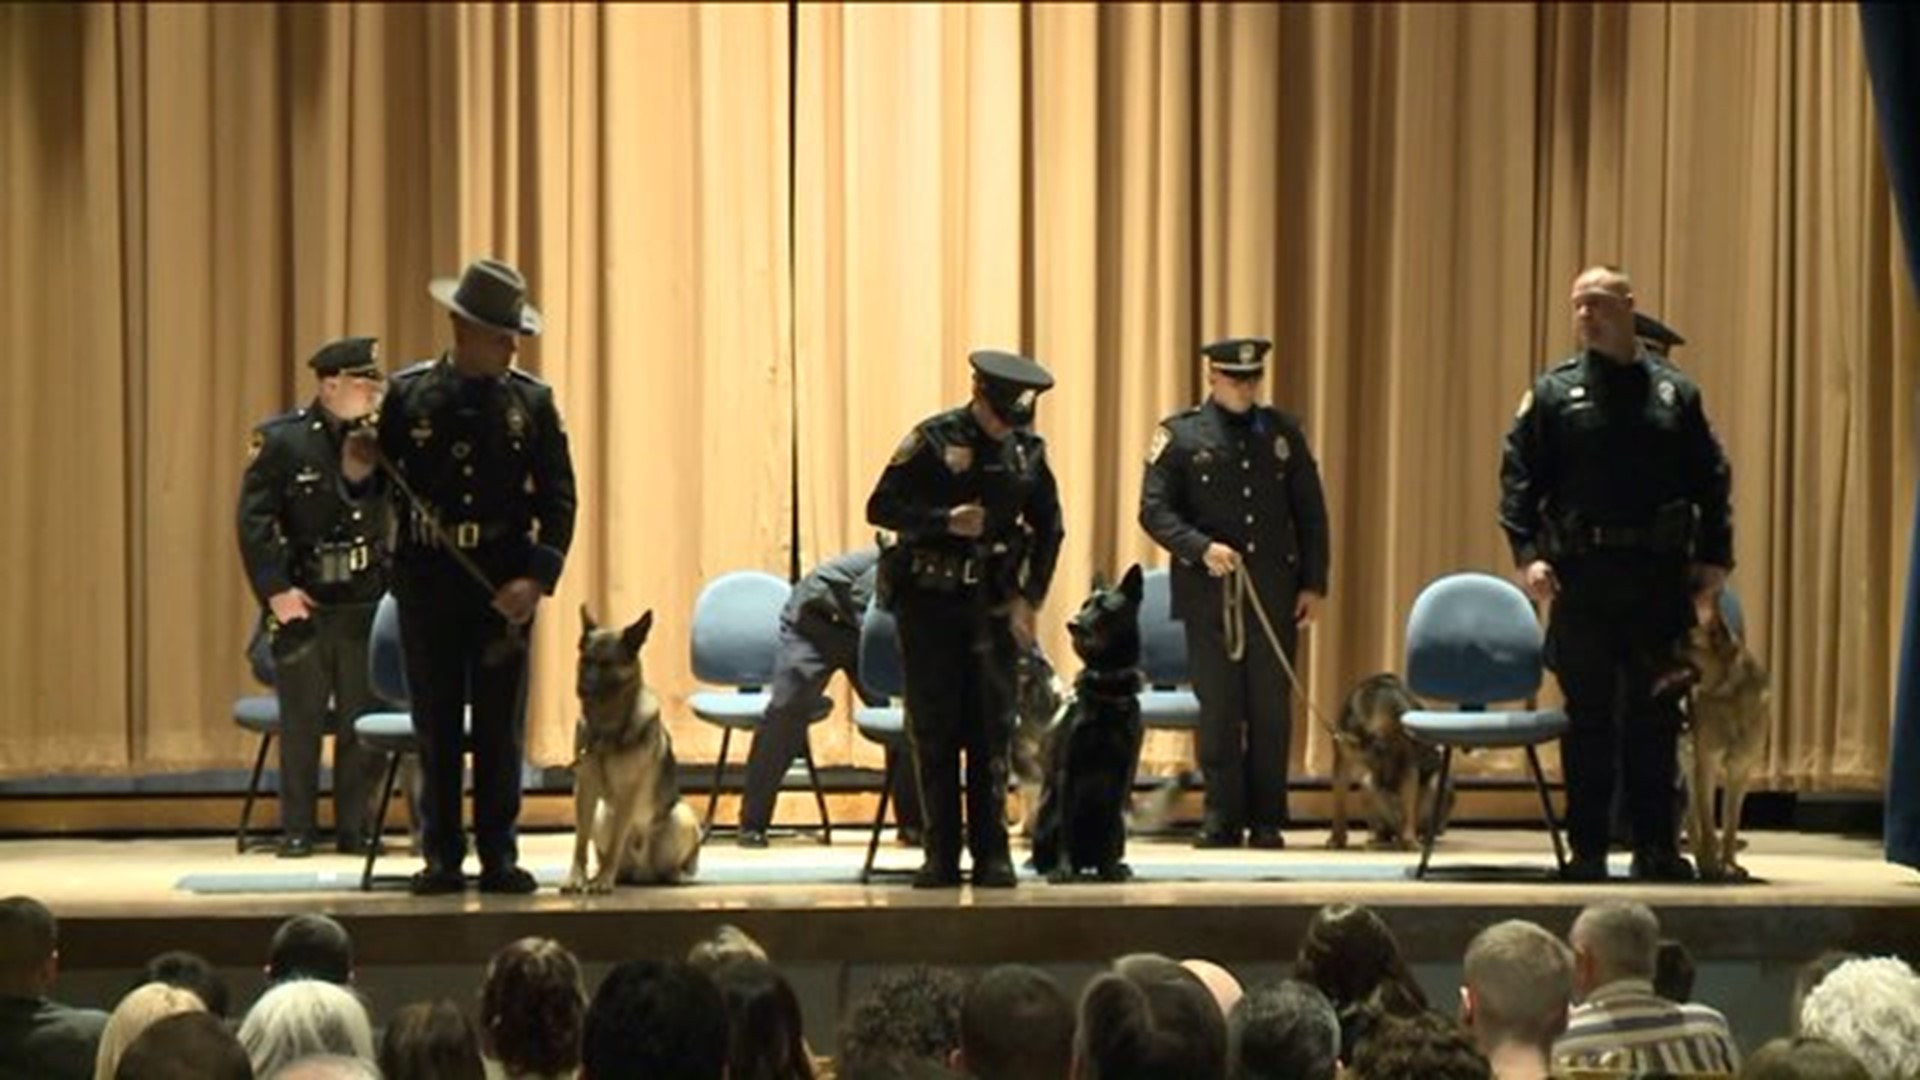 Police K9s graduate from training program